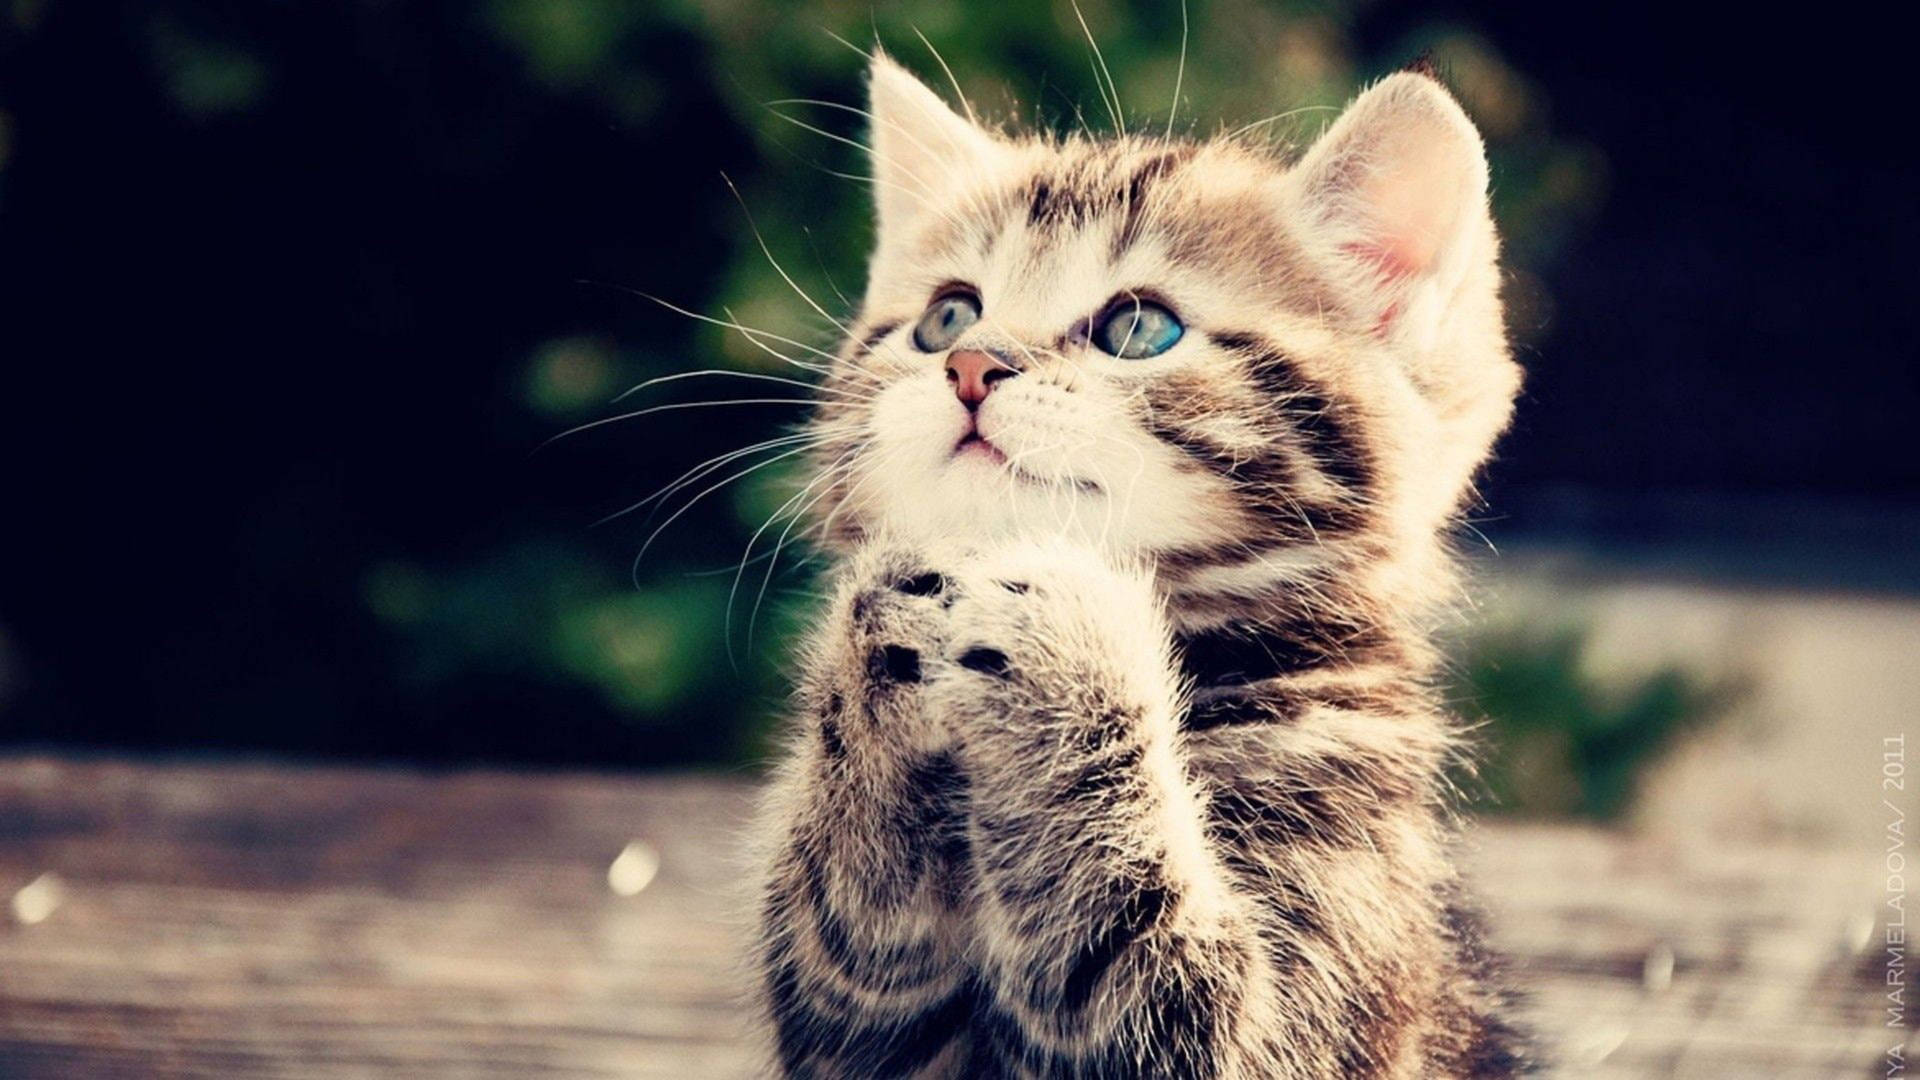 Cute Cat Hd Praying Wallpaper